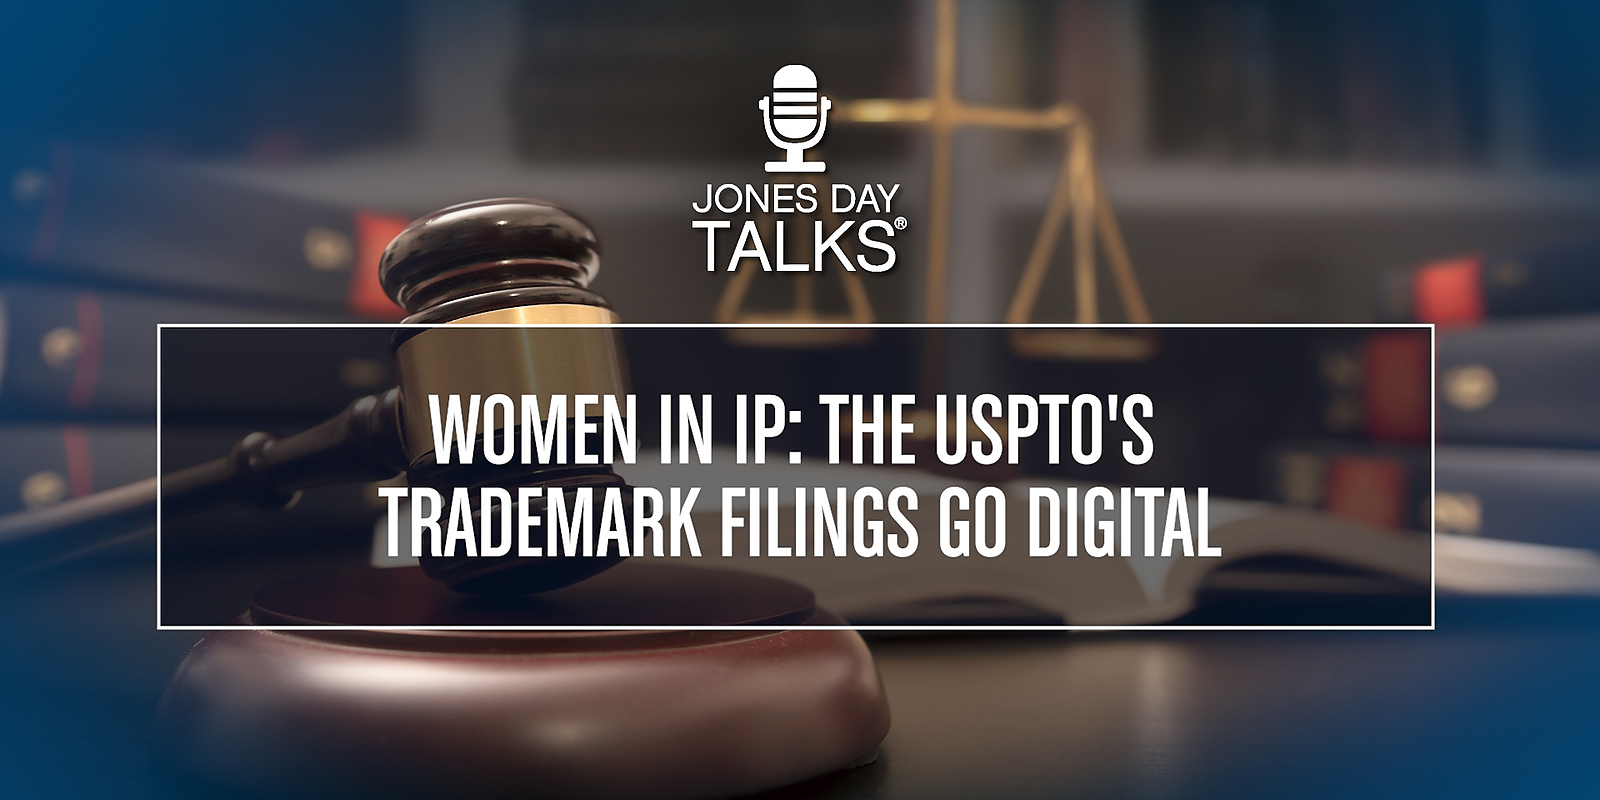 JONES DAY TALKS®: Women in IP: USPTO's Trademark Filings Go Digital